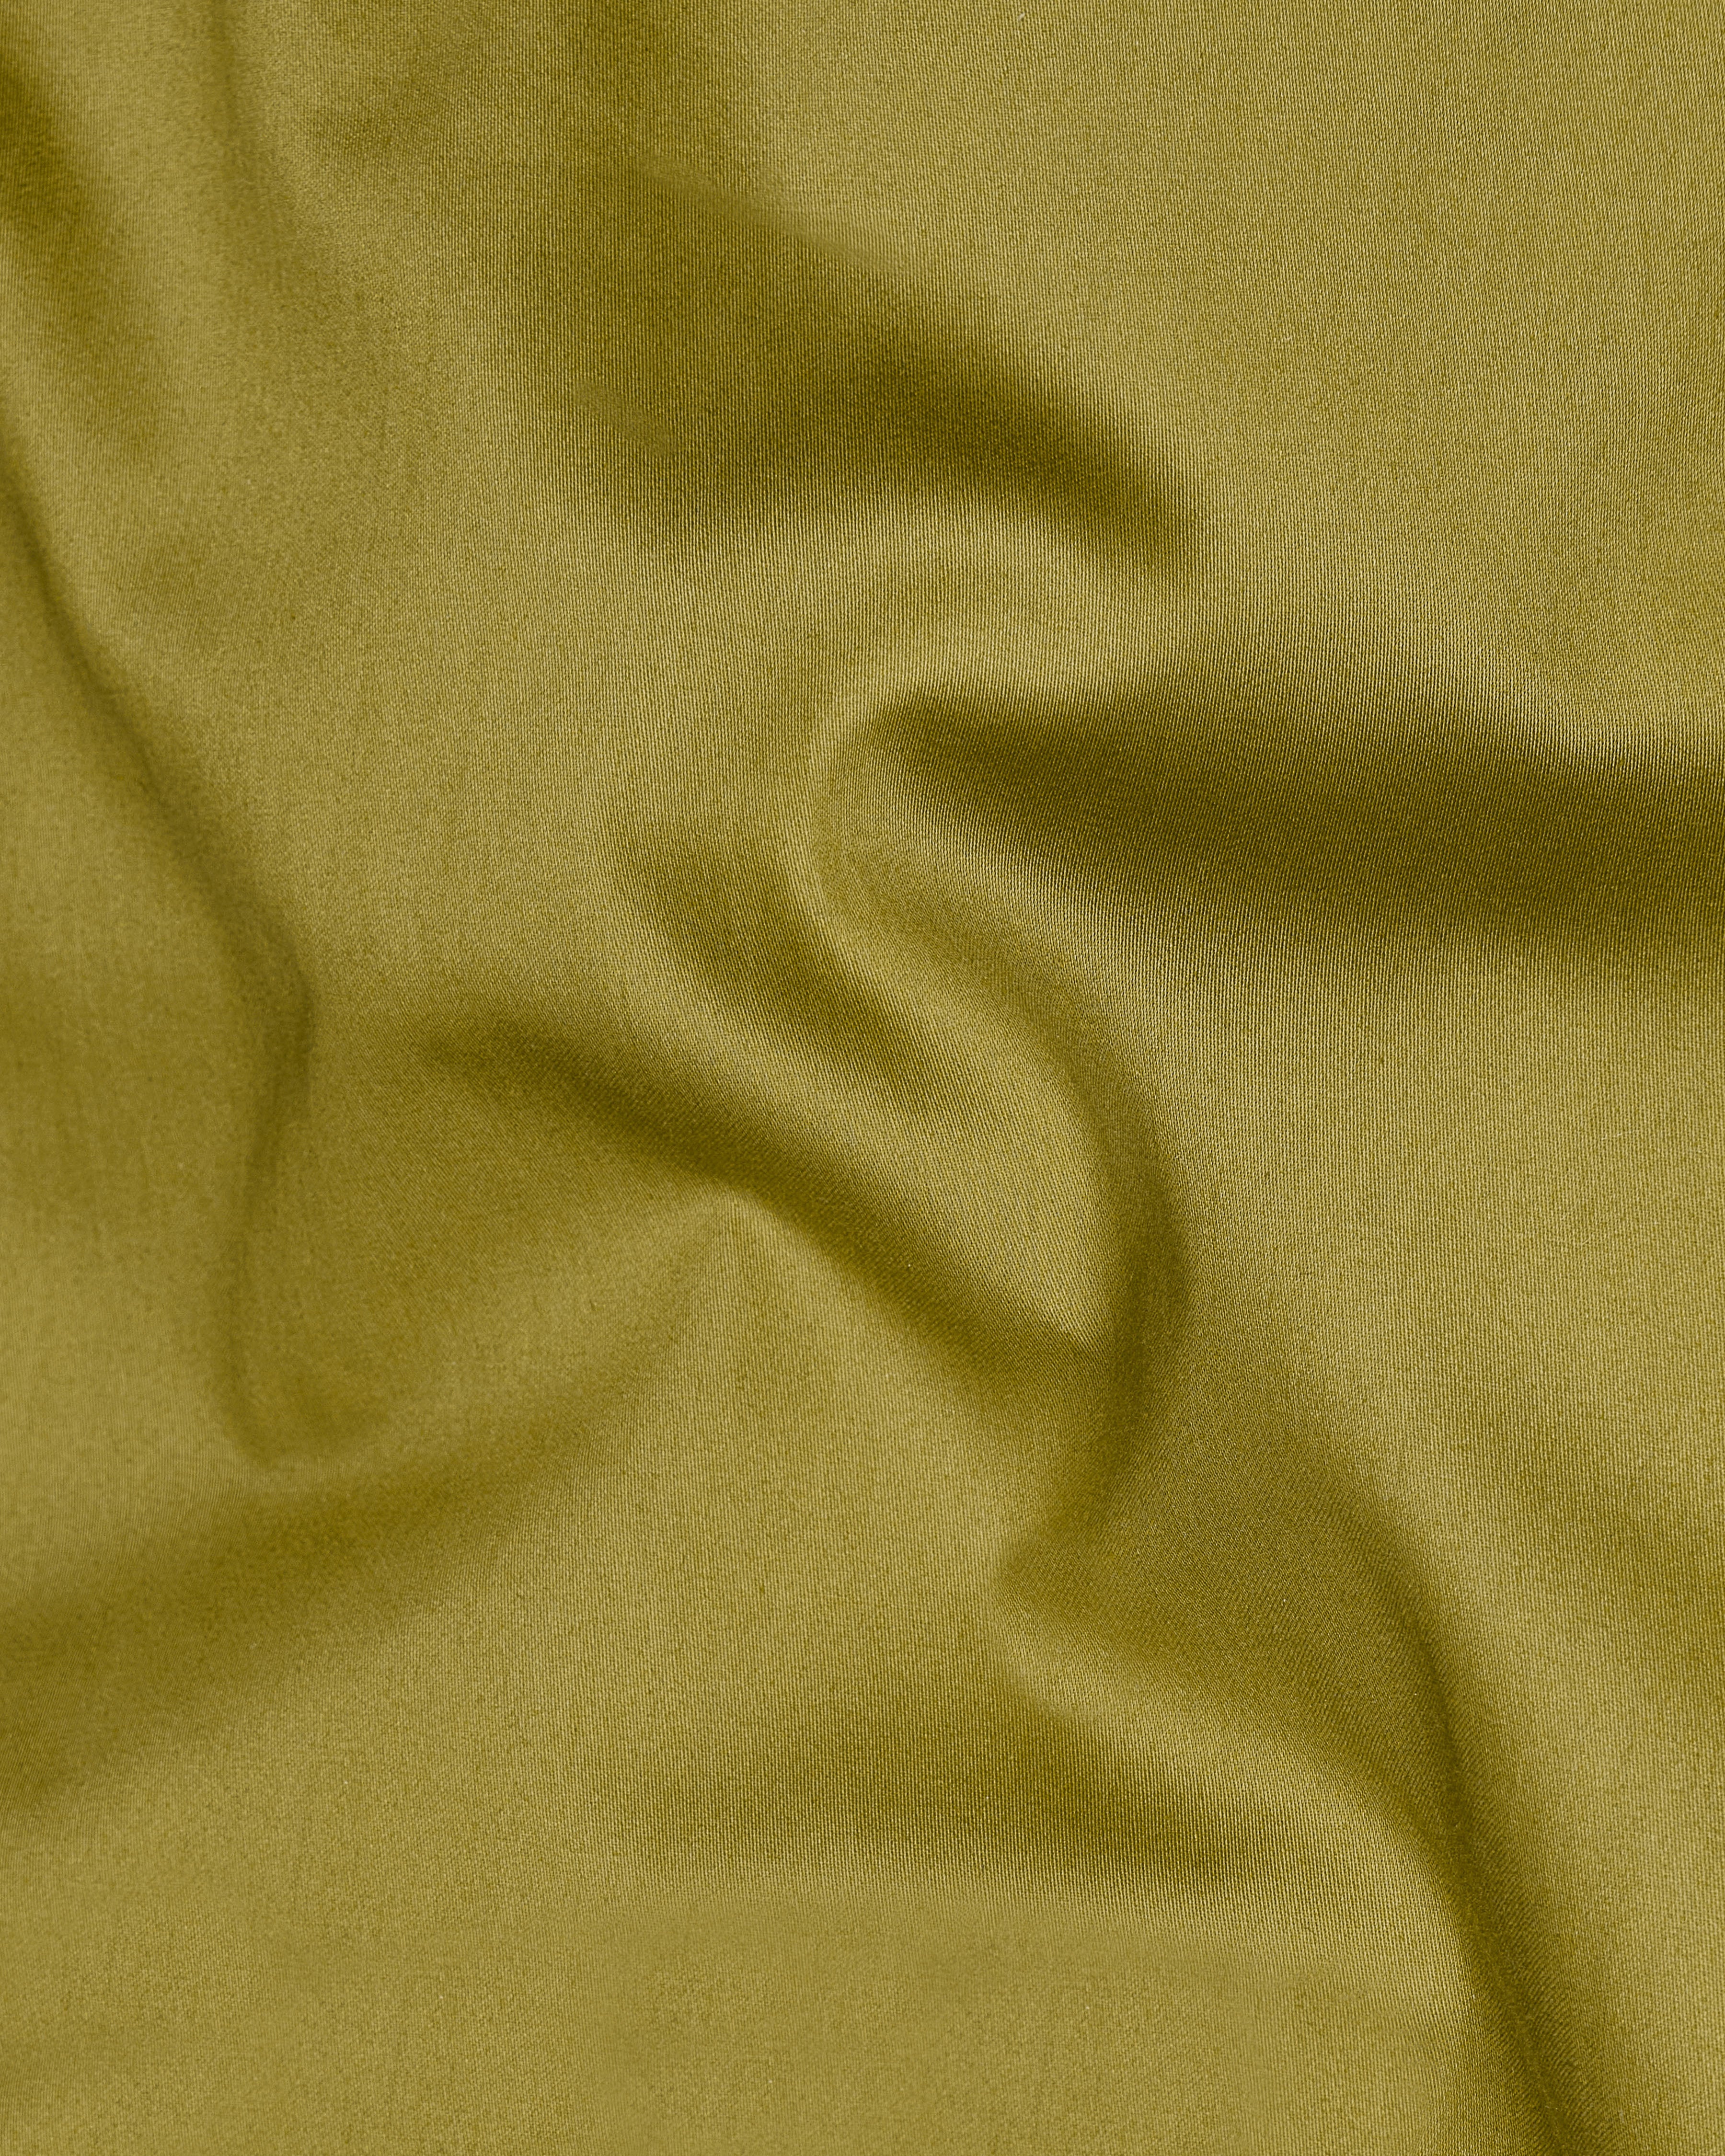 Alpine Green Super Soft Premium Cotton Shirt 9212-BLK-38,9212-BLK-H-38,9212-BLK-39,9212-BLK-H-39,9212-BLK-40,9212-BLK-H-40,9212-BLK-42,9212-BLK-H-42,9212-BLK-44,9212-BLK-H-44,9212-BLK-46,9212-BLK-H-46,9212-BLK-48,9212-BLK-H-48,9212-BLK-50,9212-BLK-H-50,9212-BLK-52,9212-BLK-H-52